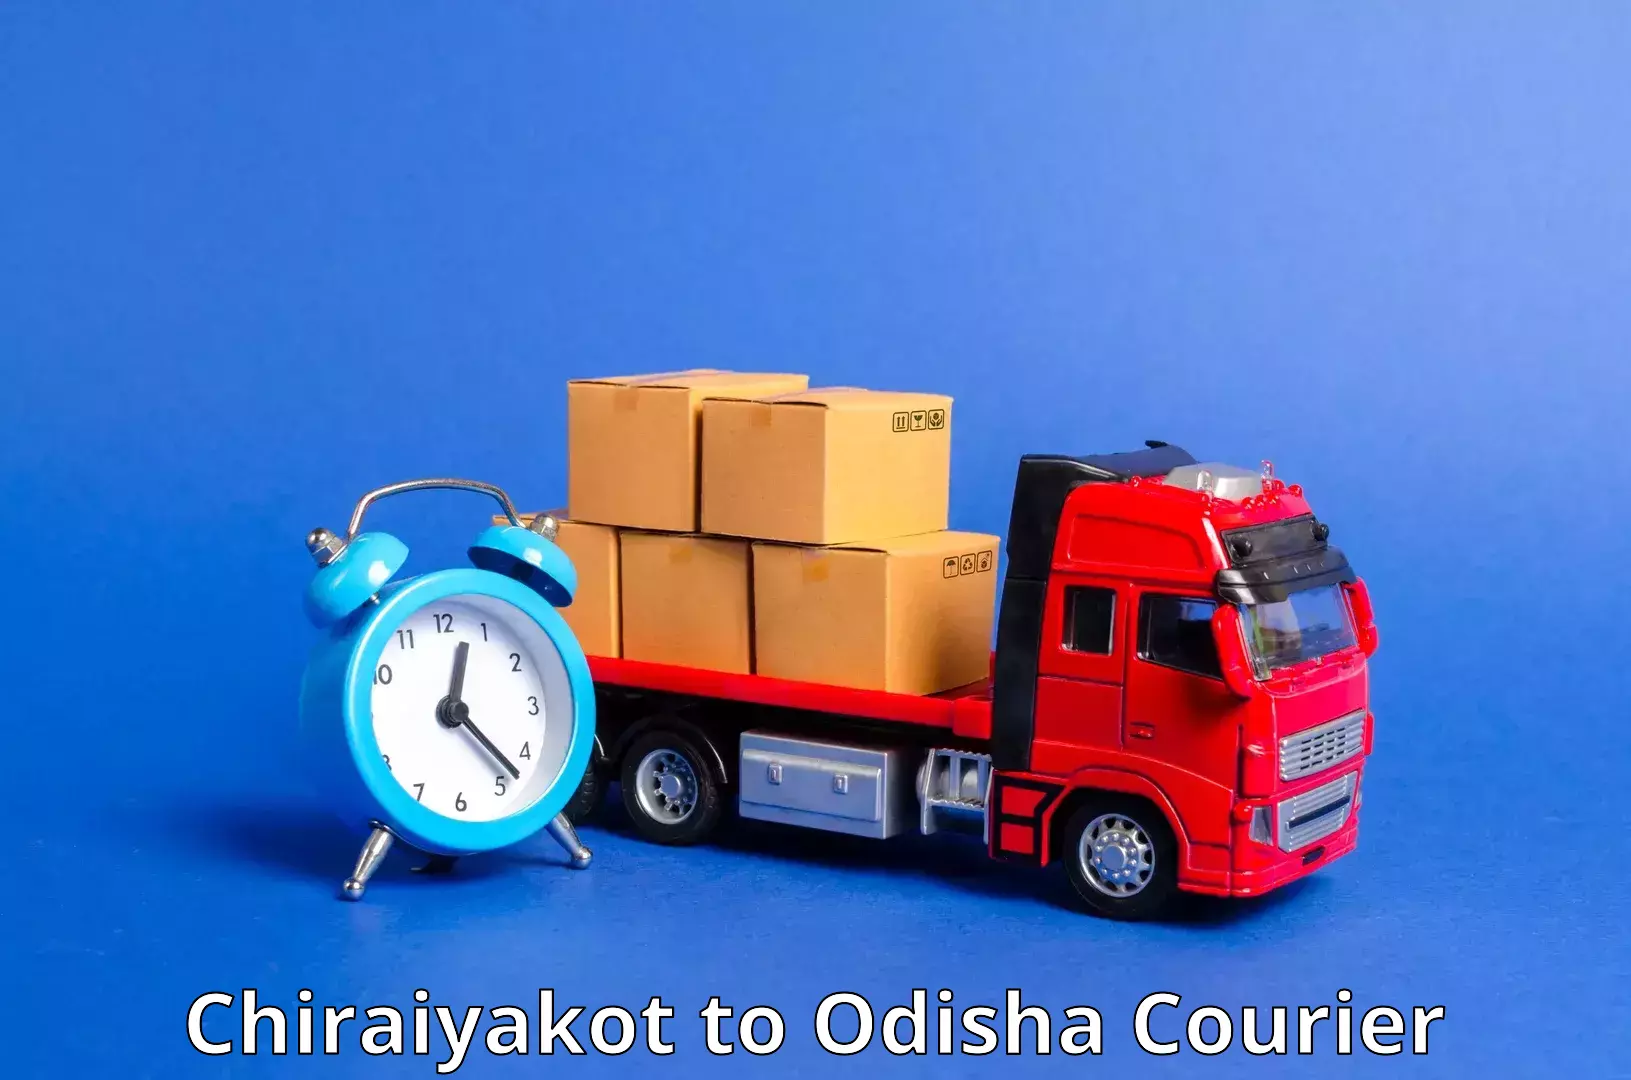 On-call courier service Chiraiyakot to Raruan